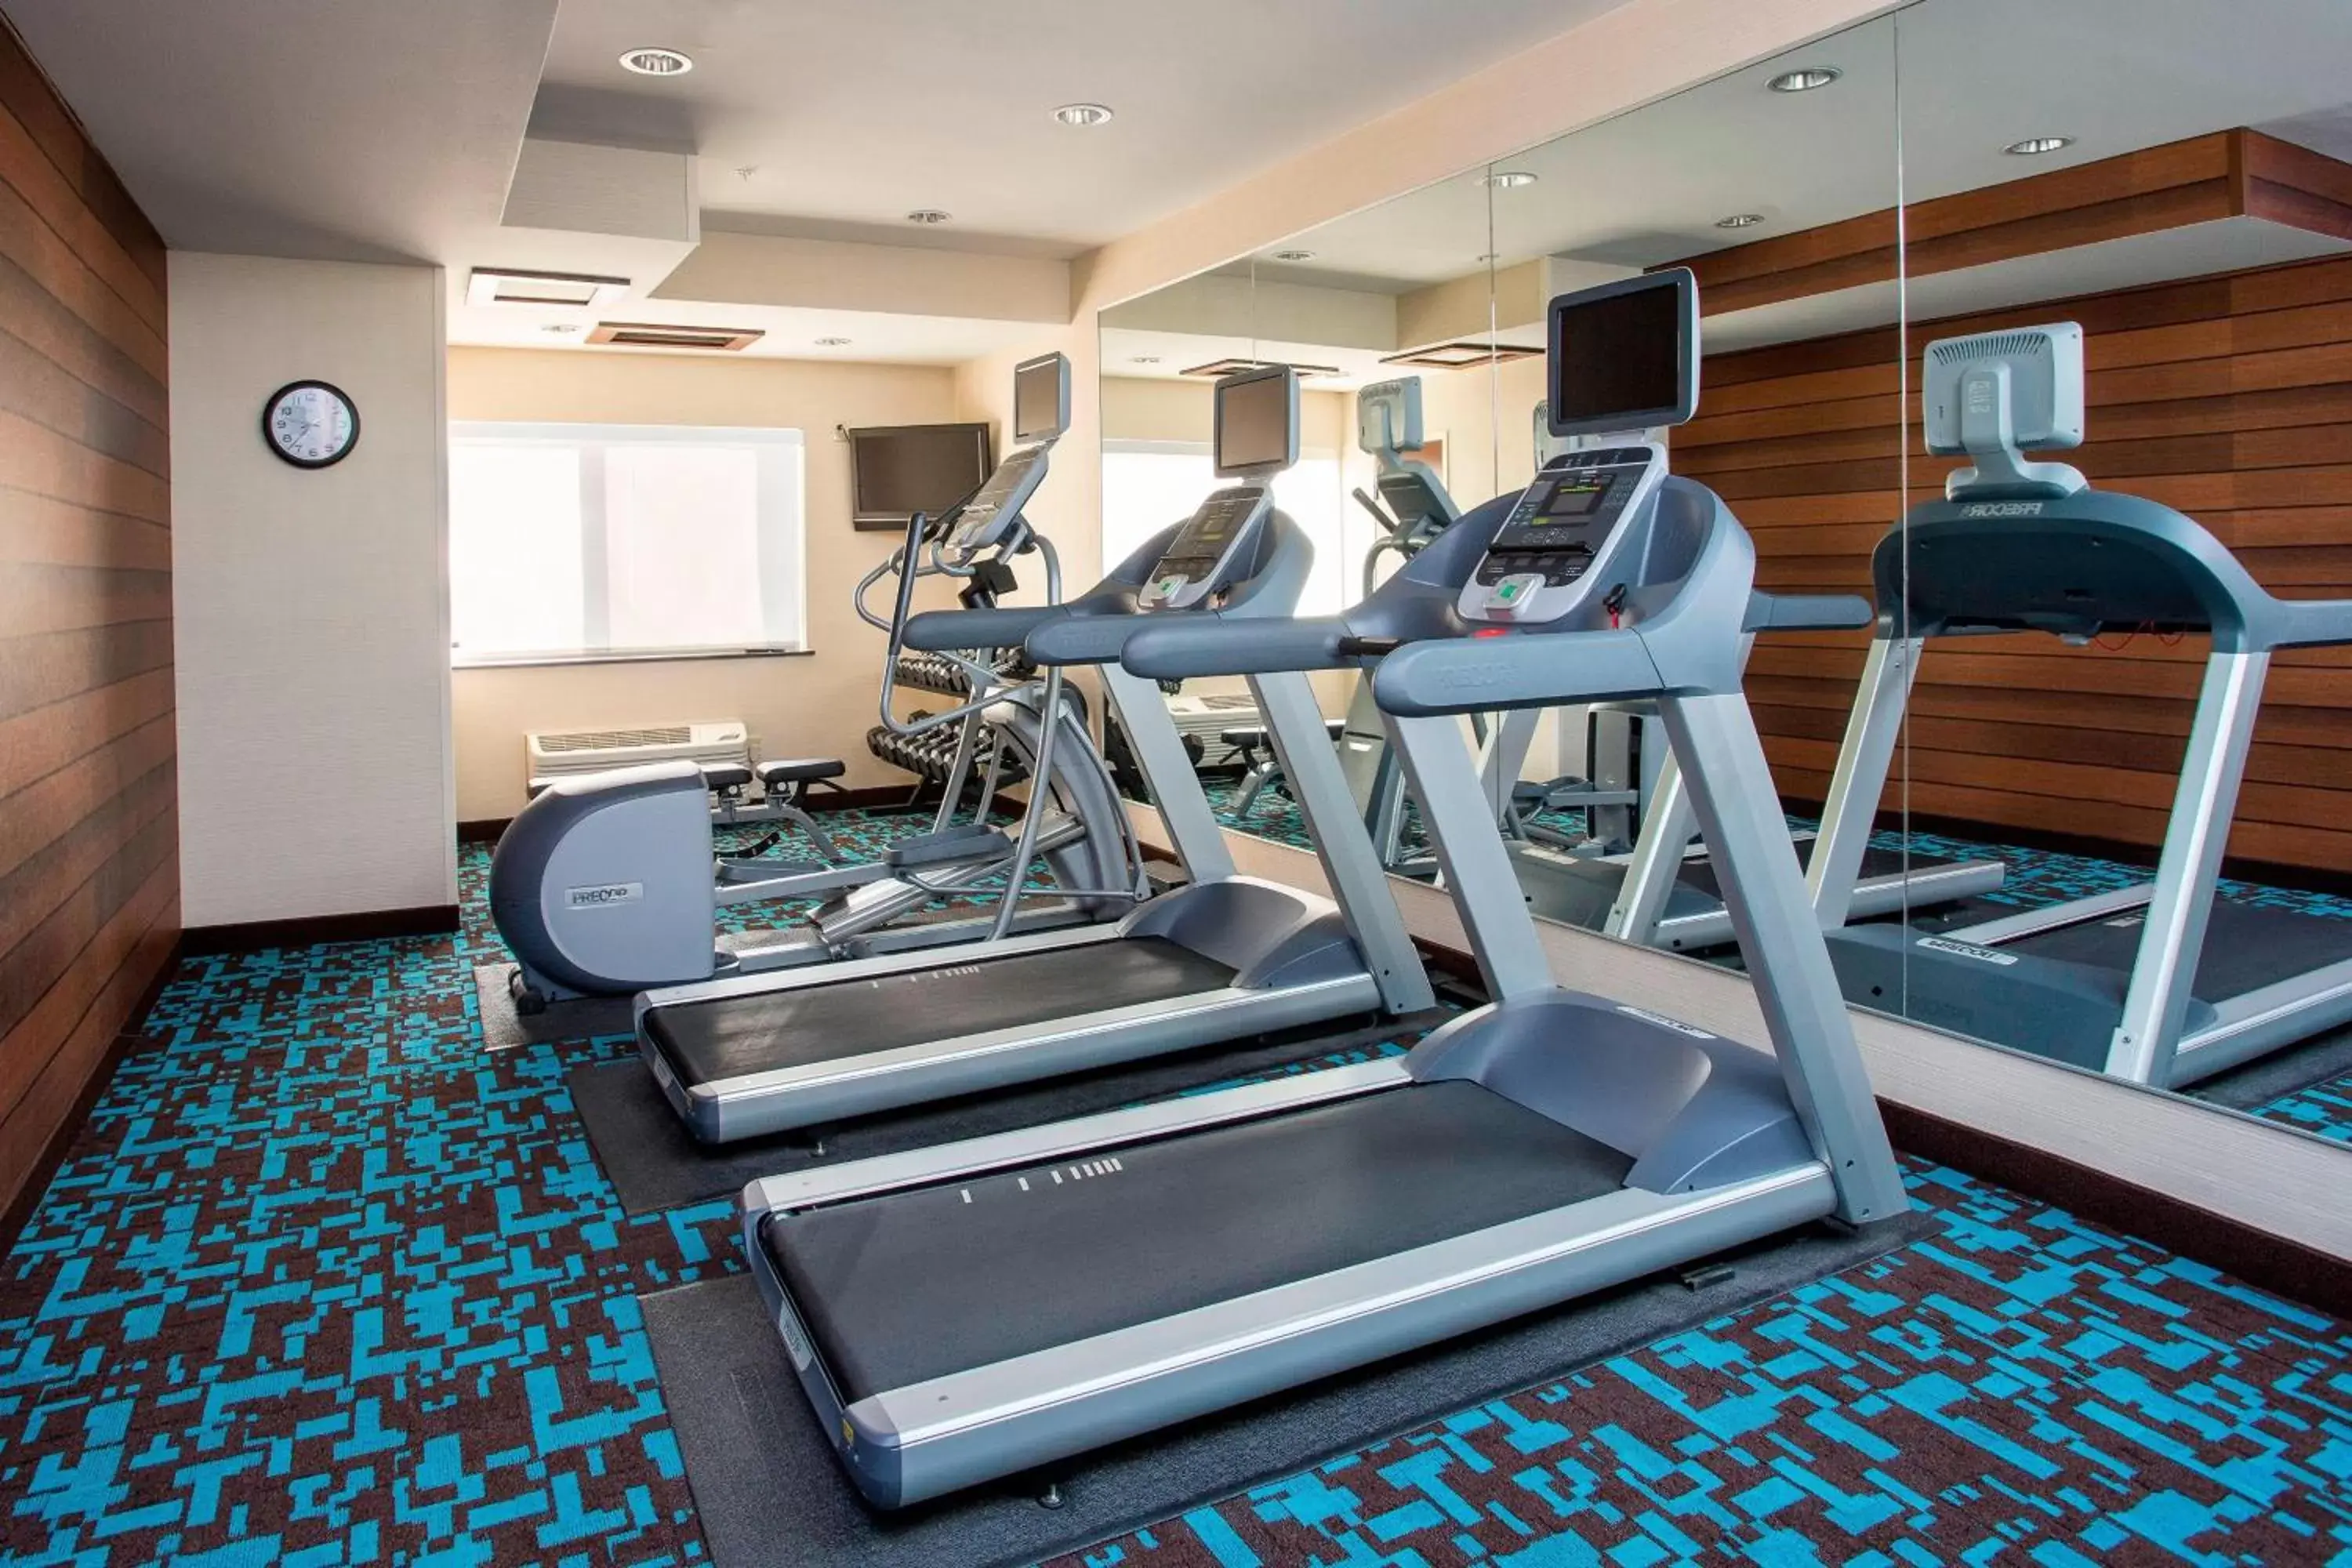 Fitness centre/facilities, Fitness Center/Facilities in Fairfield Inn & Suites Ashland